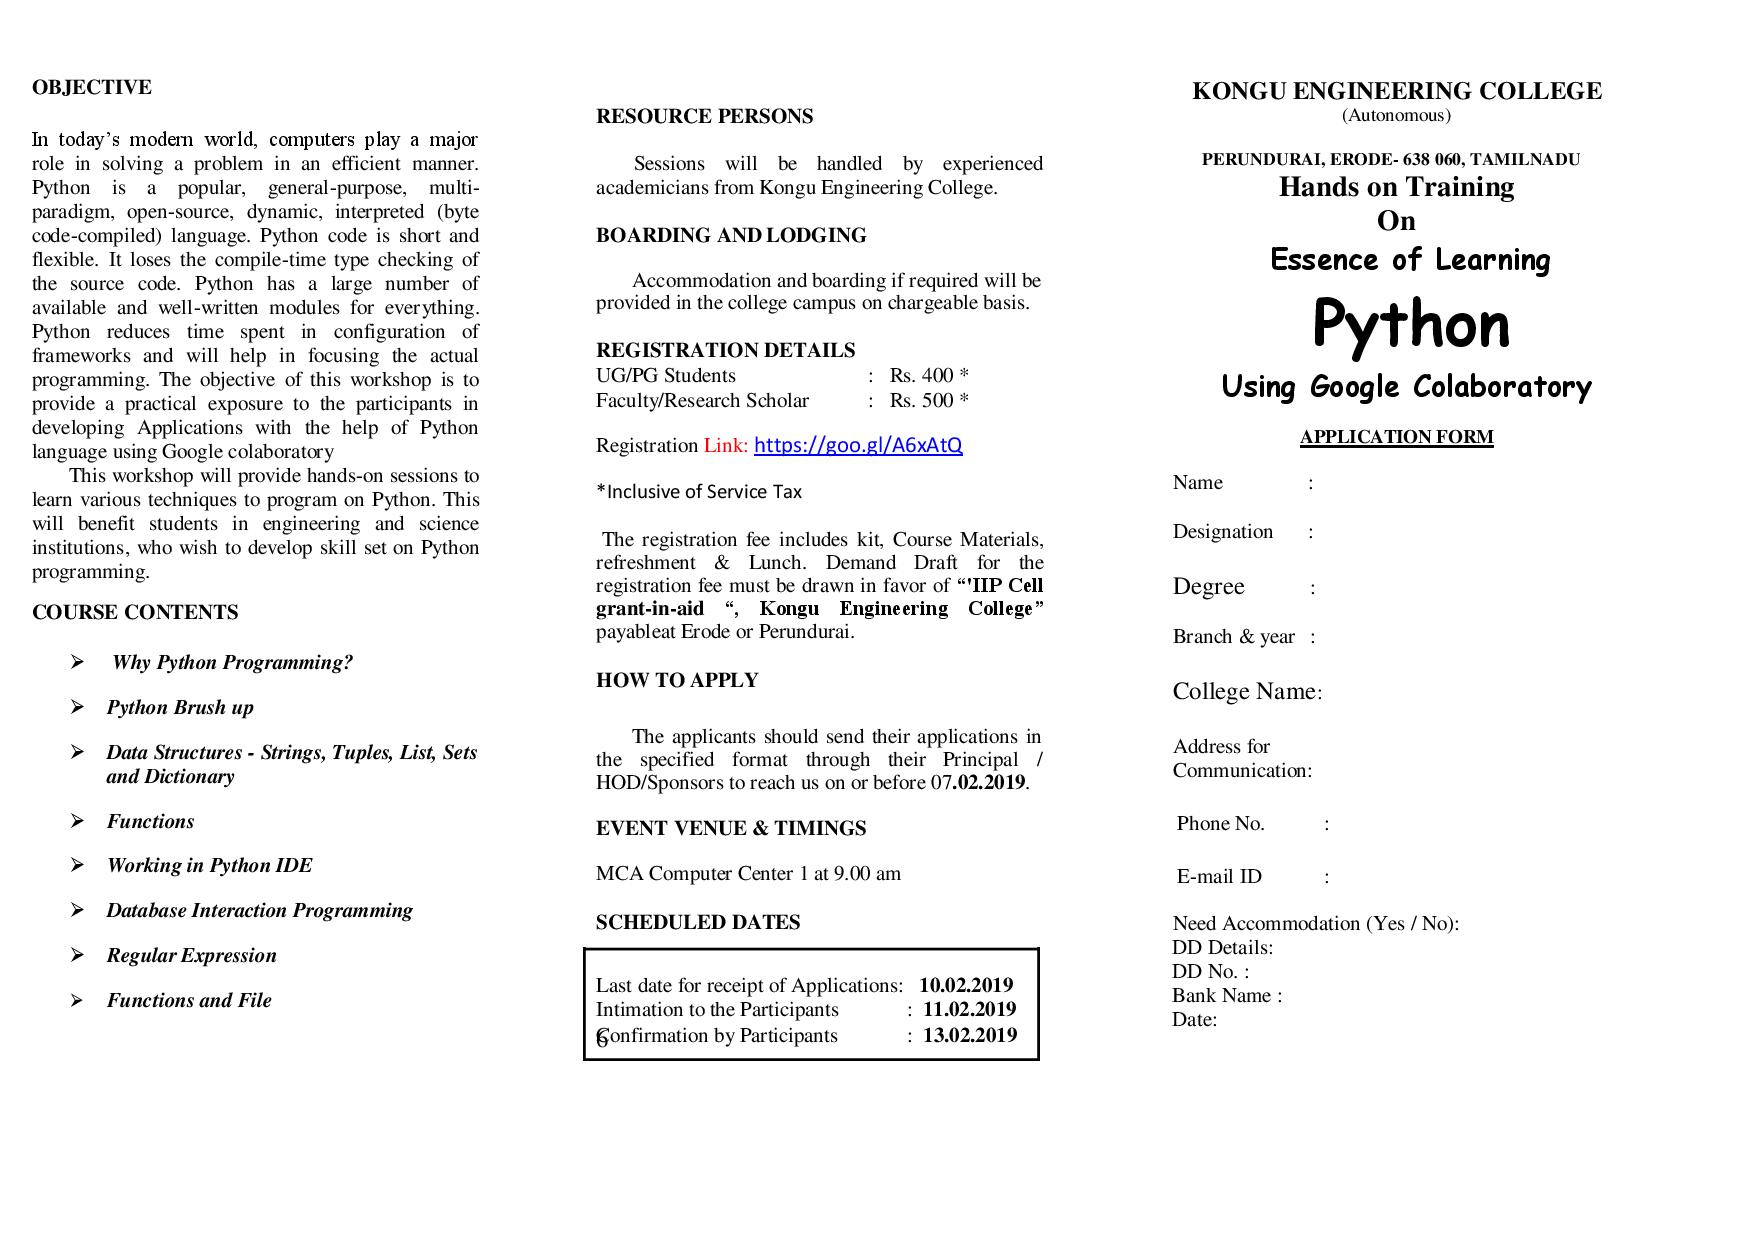 Hands on Training on Essence of Learning Python Using Google Colaboratory 2019